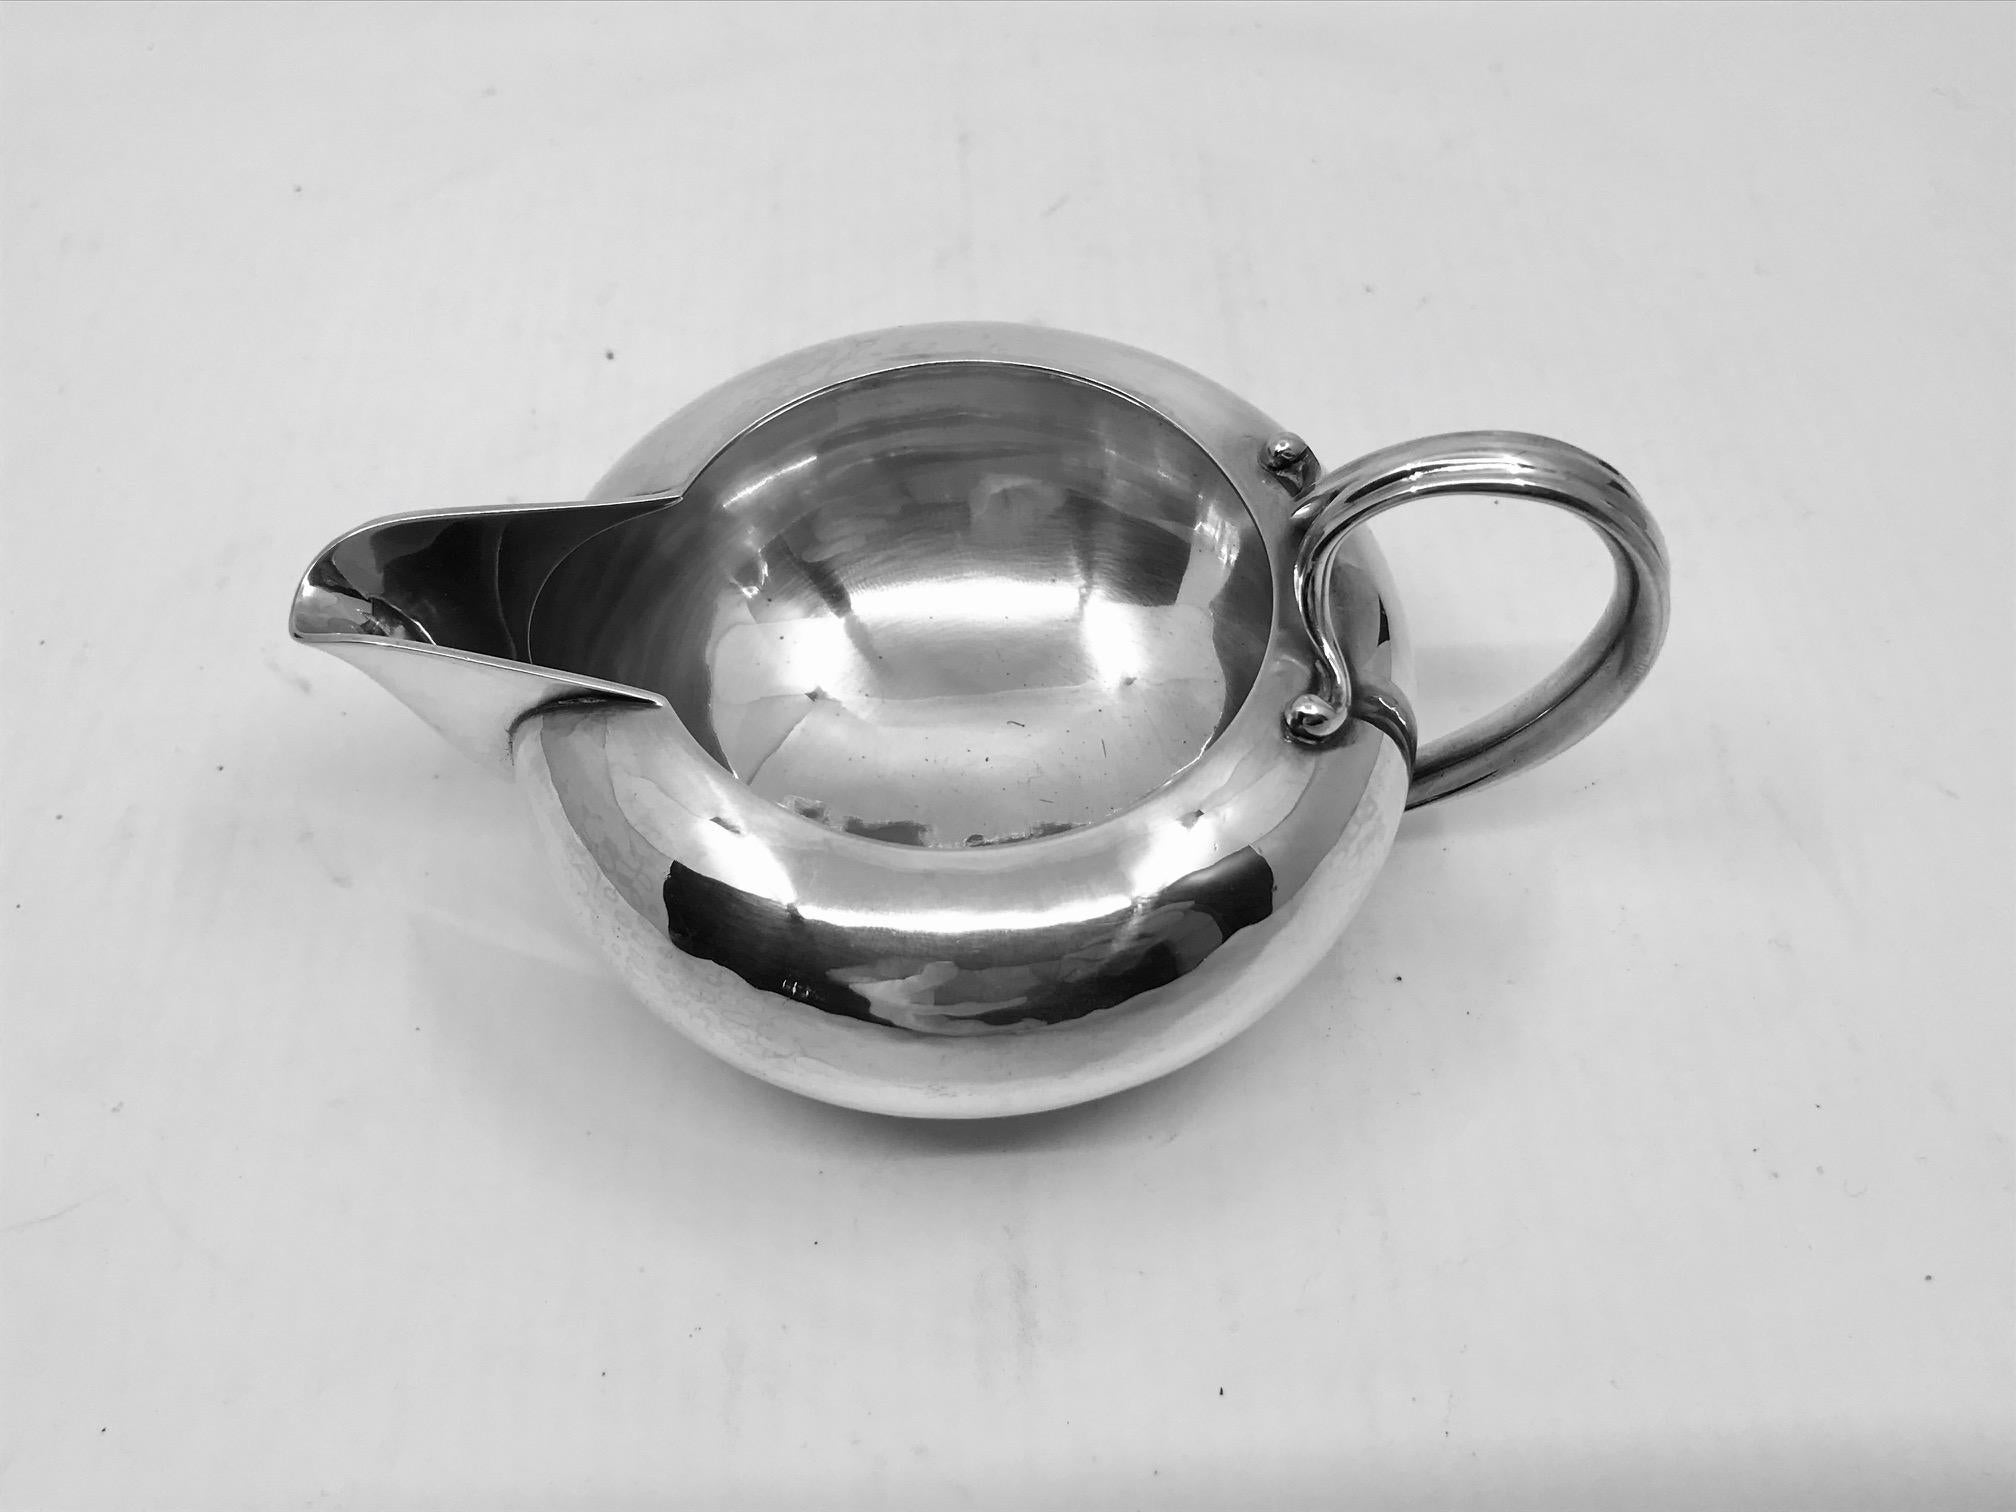 Vintage Georg Jensen Johan Rohde Tea Set #787 For Sale 1